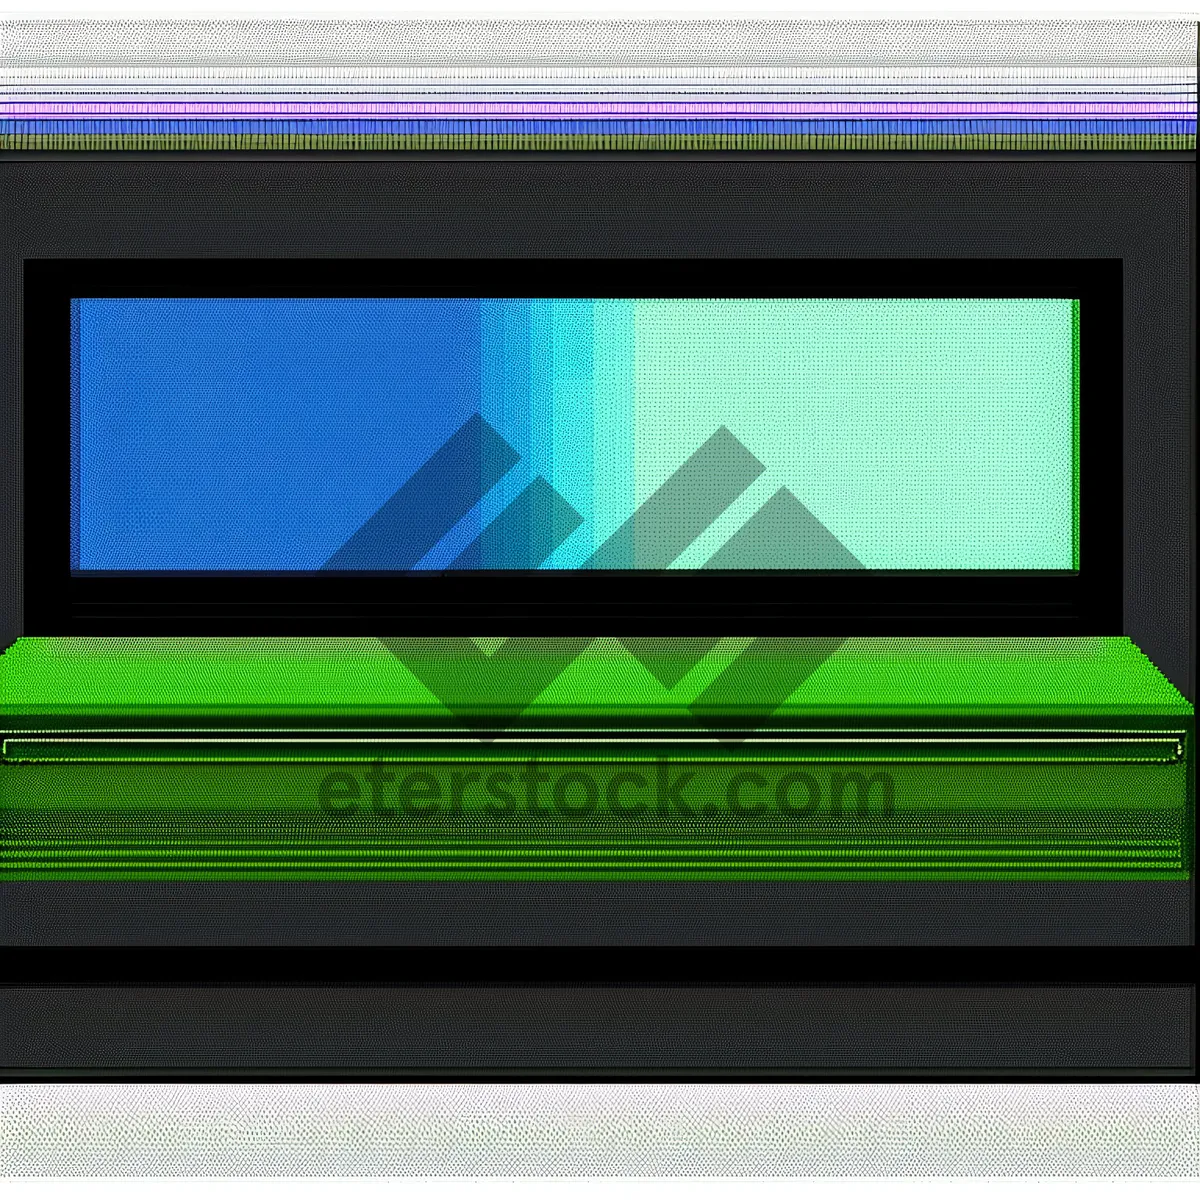 Picture of Modern Digital Display with Sleek Design